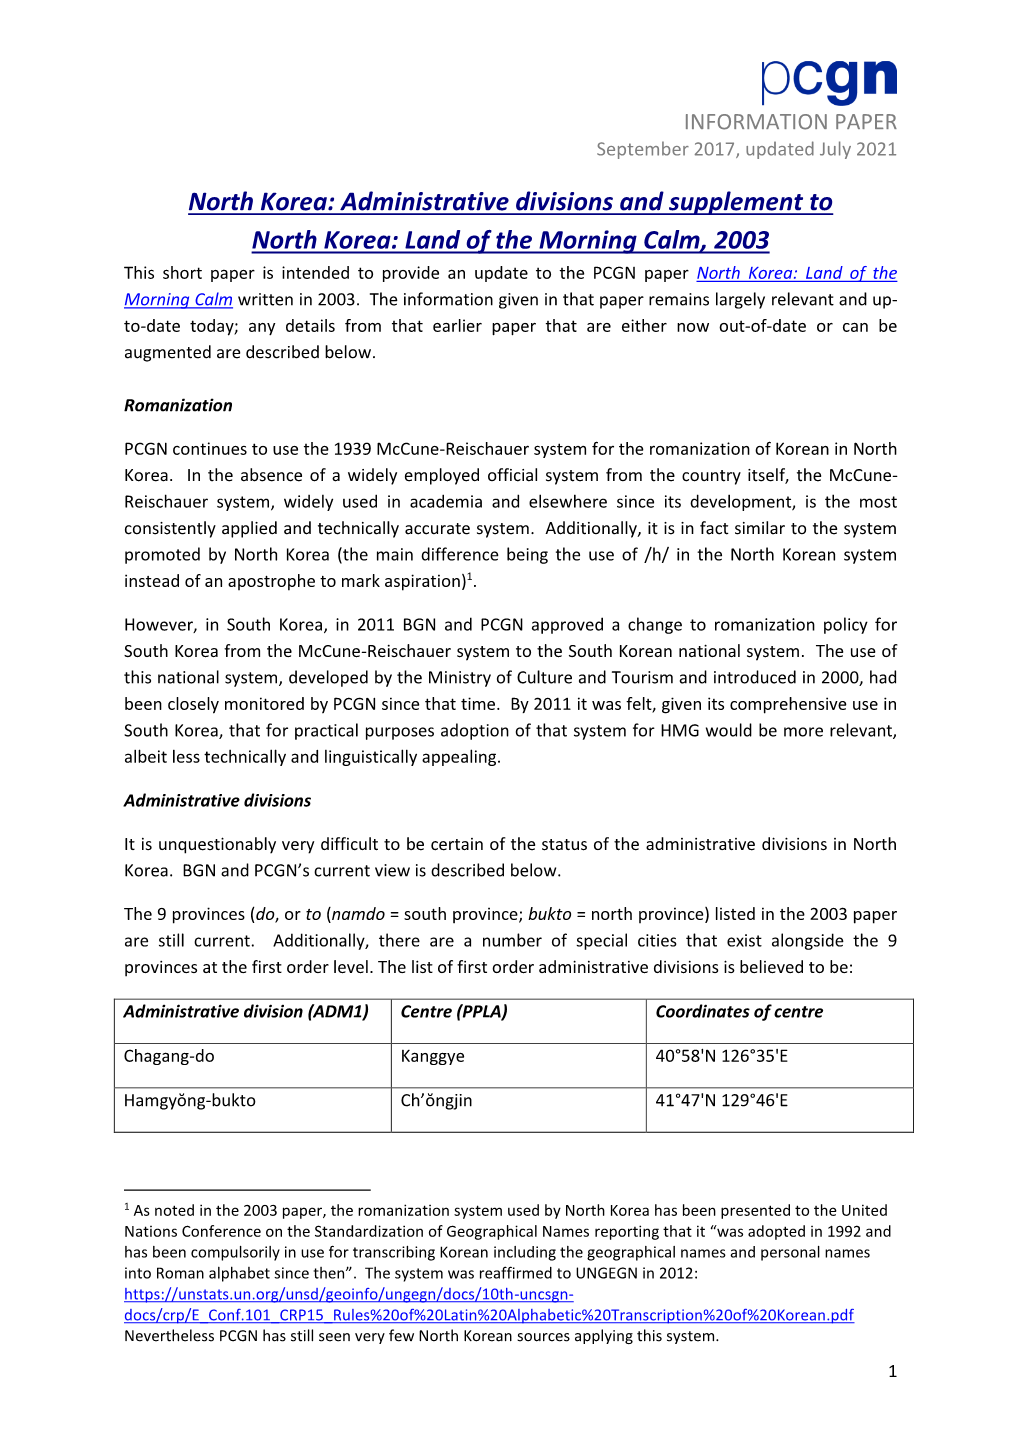 North Korea Information Paper